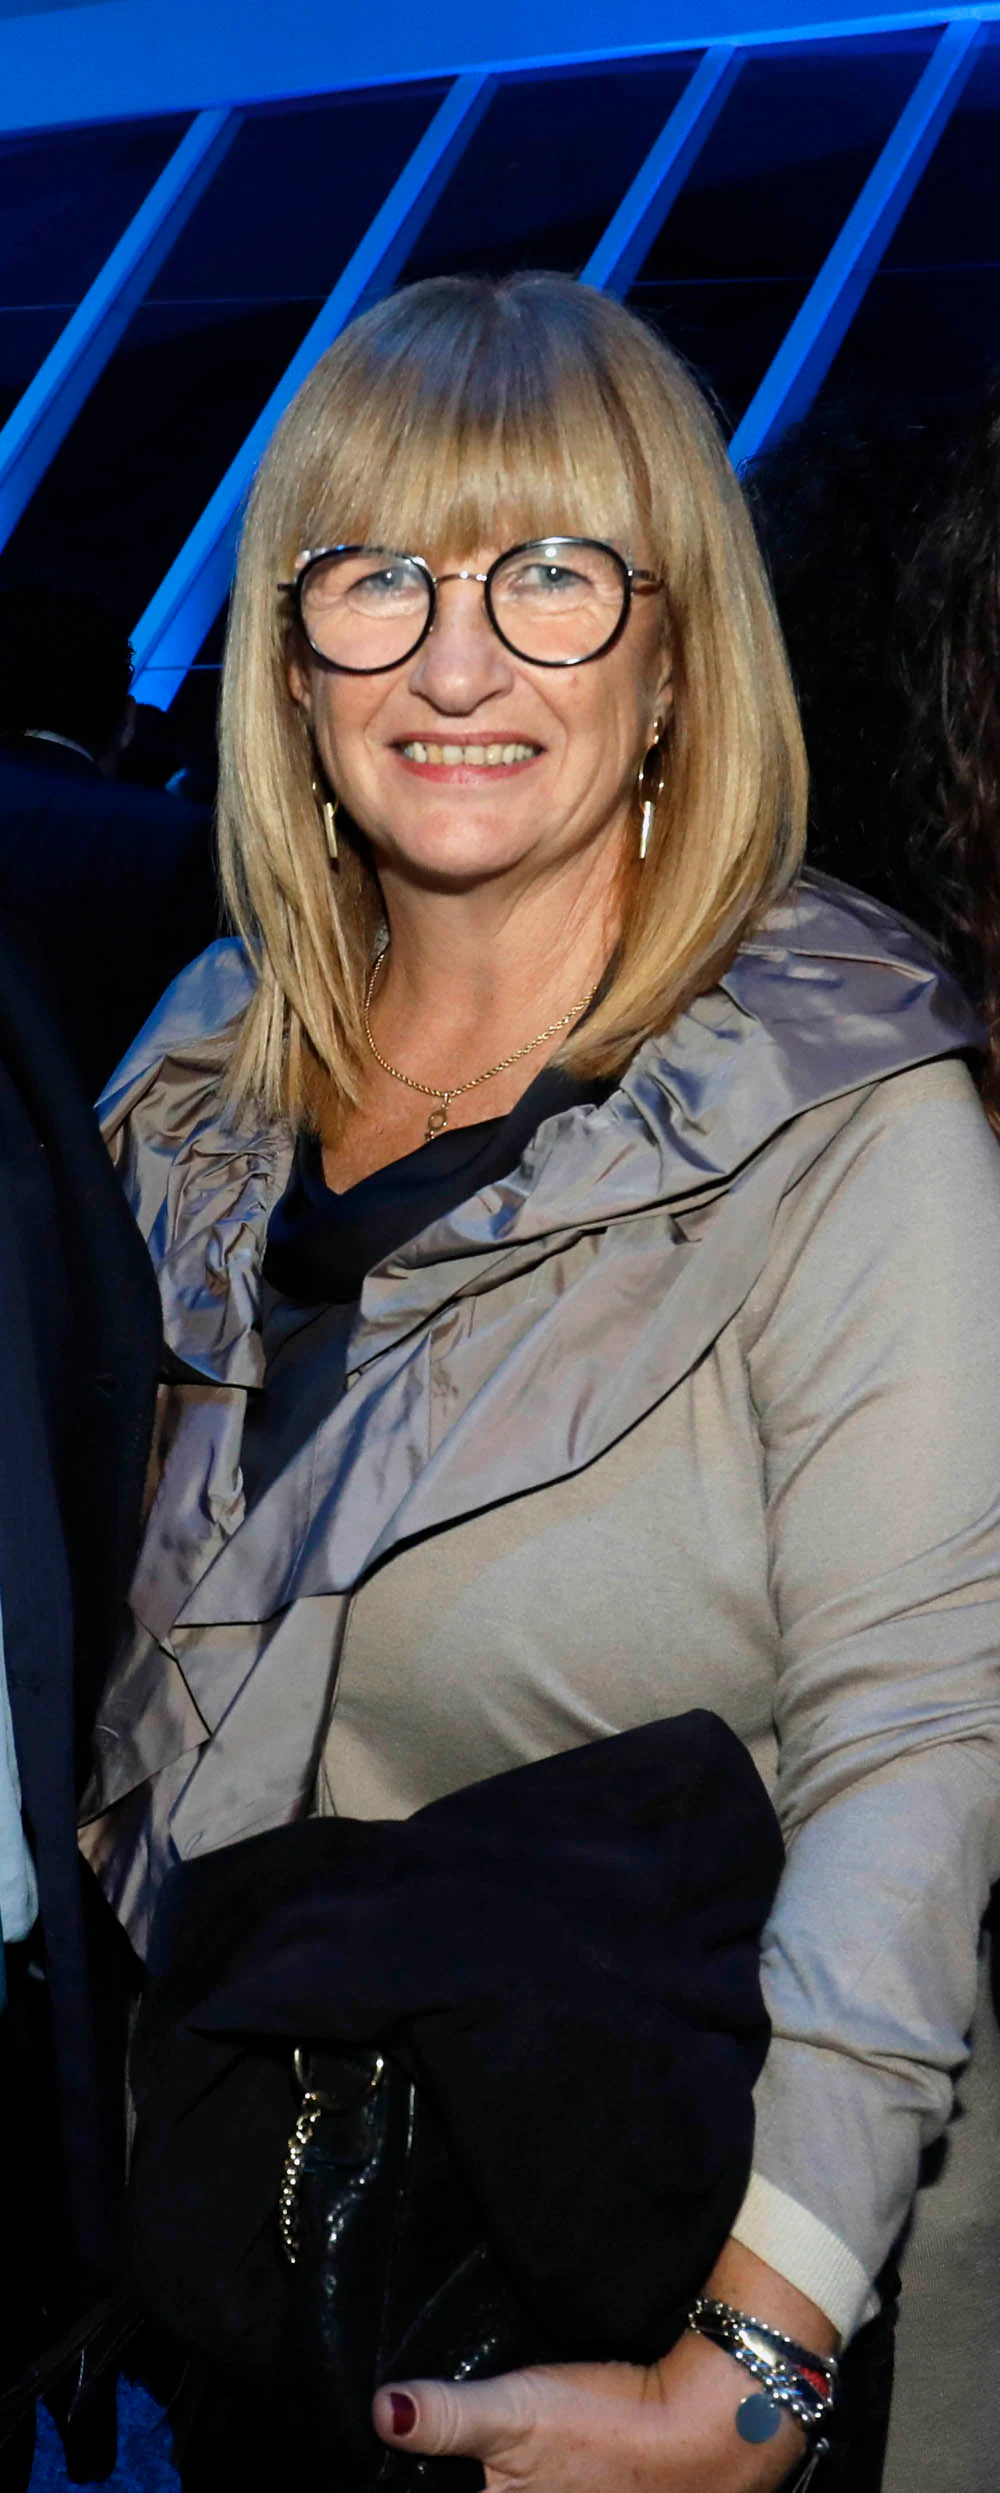 La subsecretaria de Hacienda, Cristina Moreno.